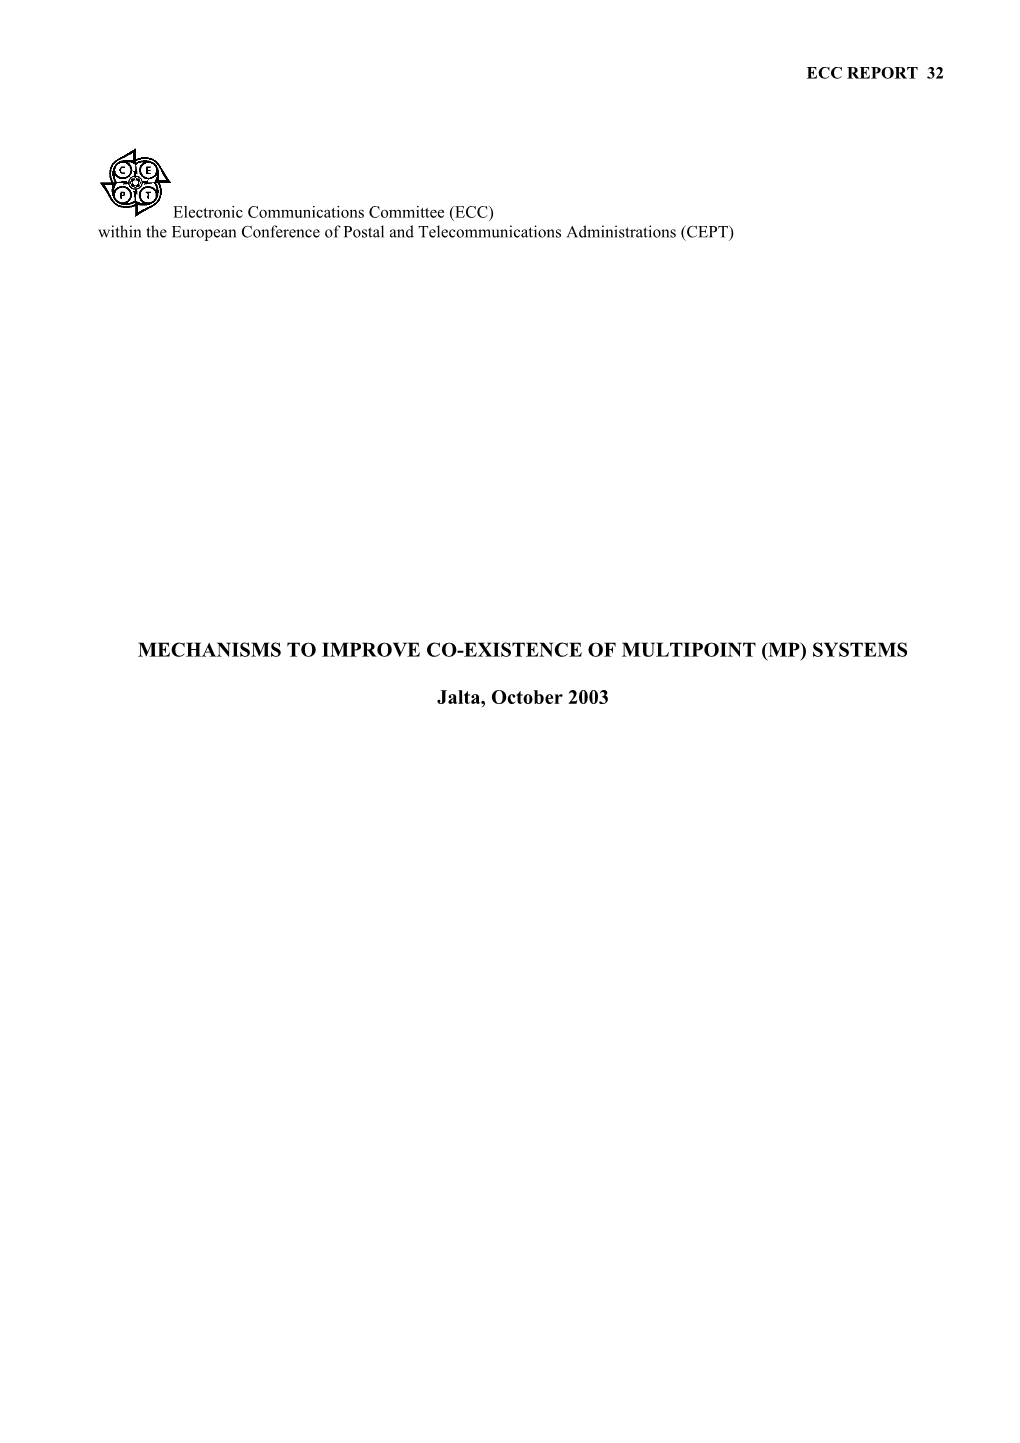 MP Coexistence Improvement Draft Report -Doc SE19(02)112R3